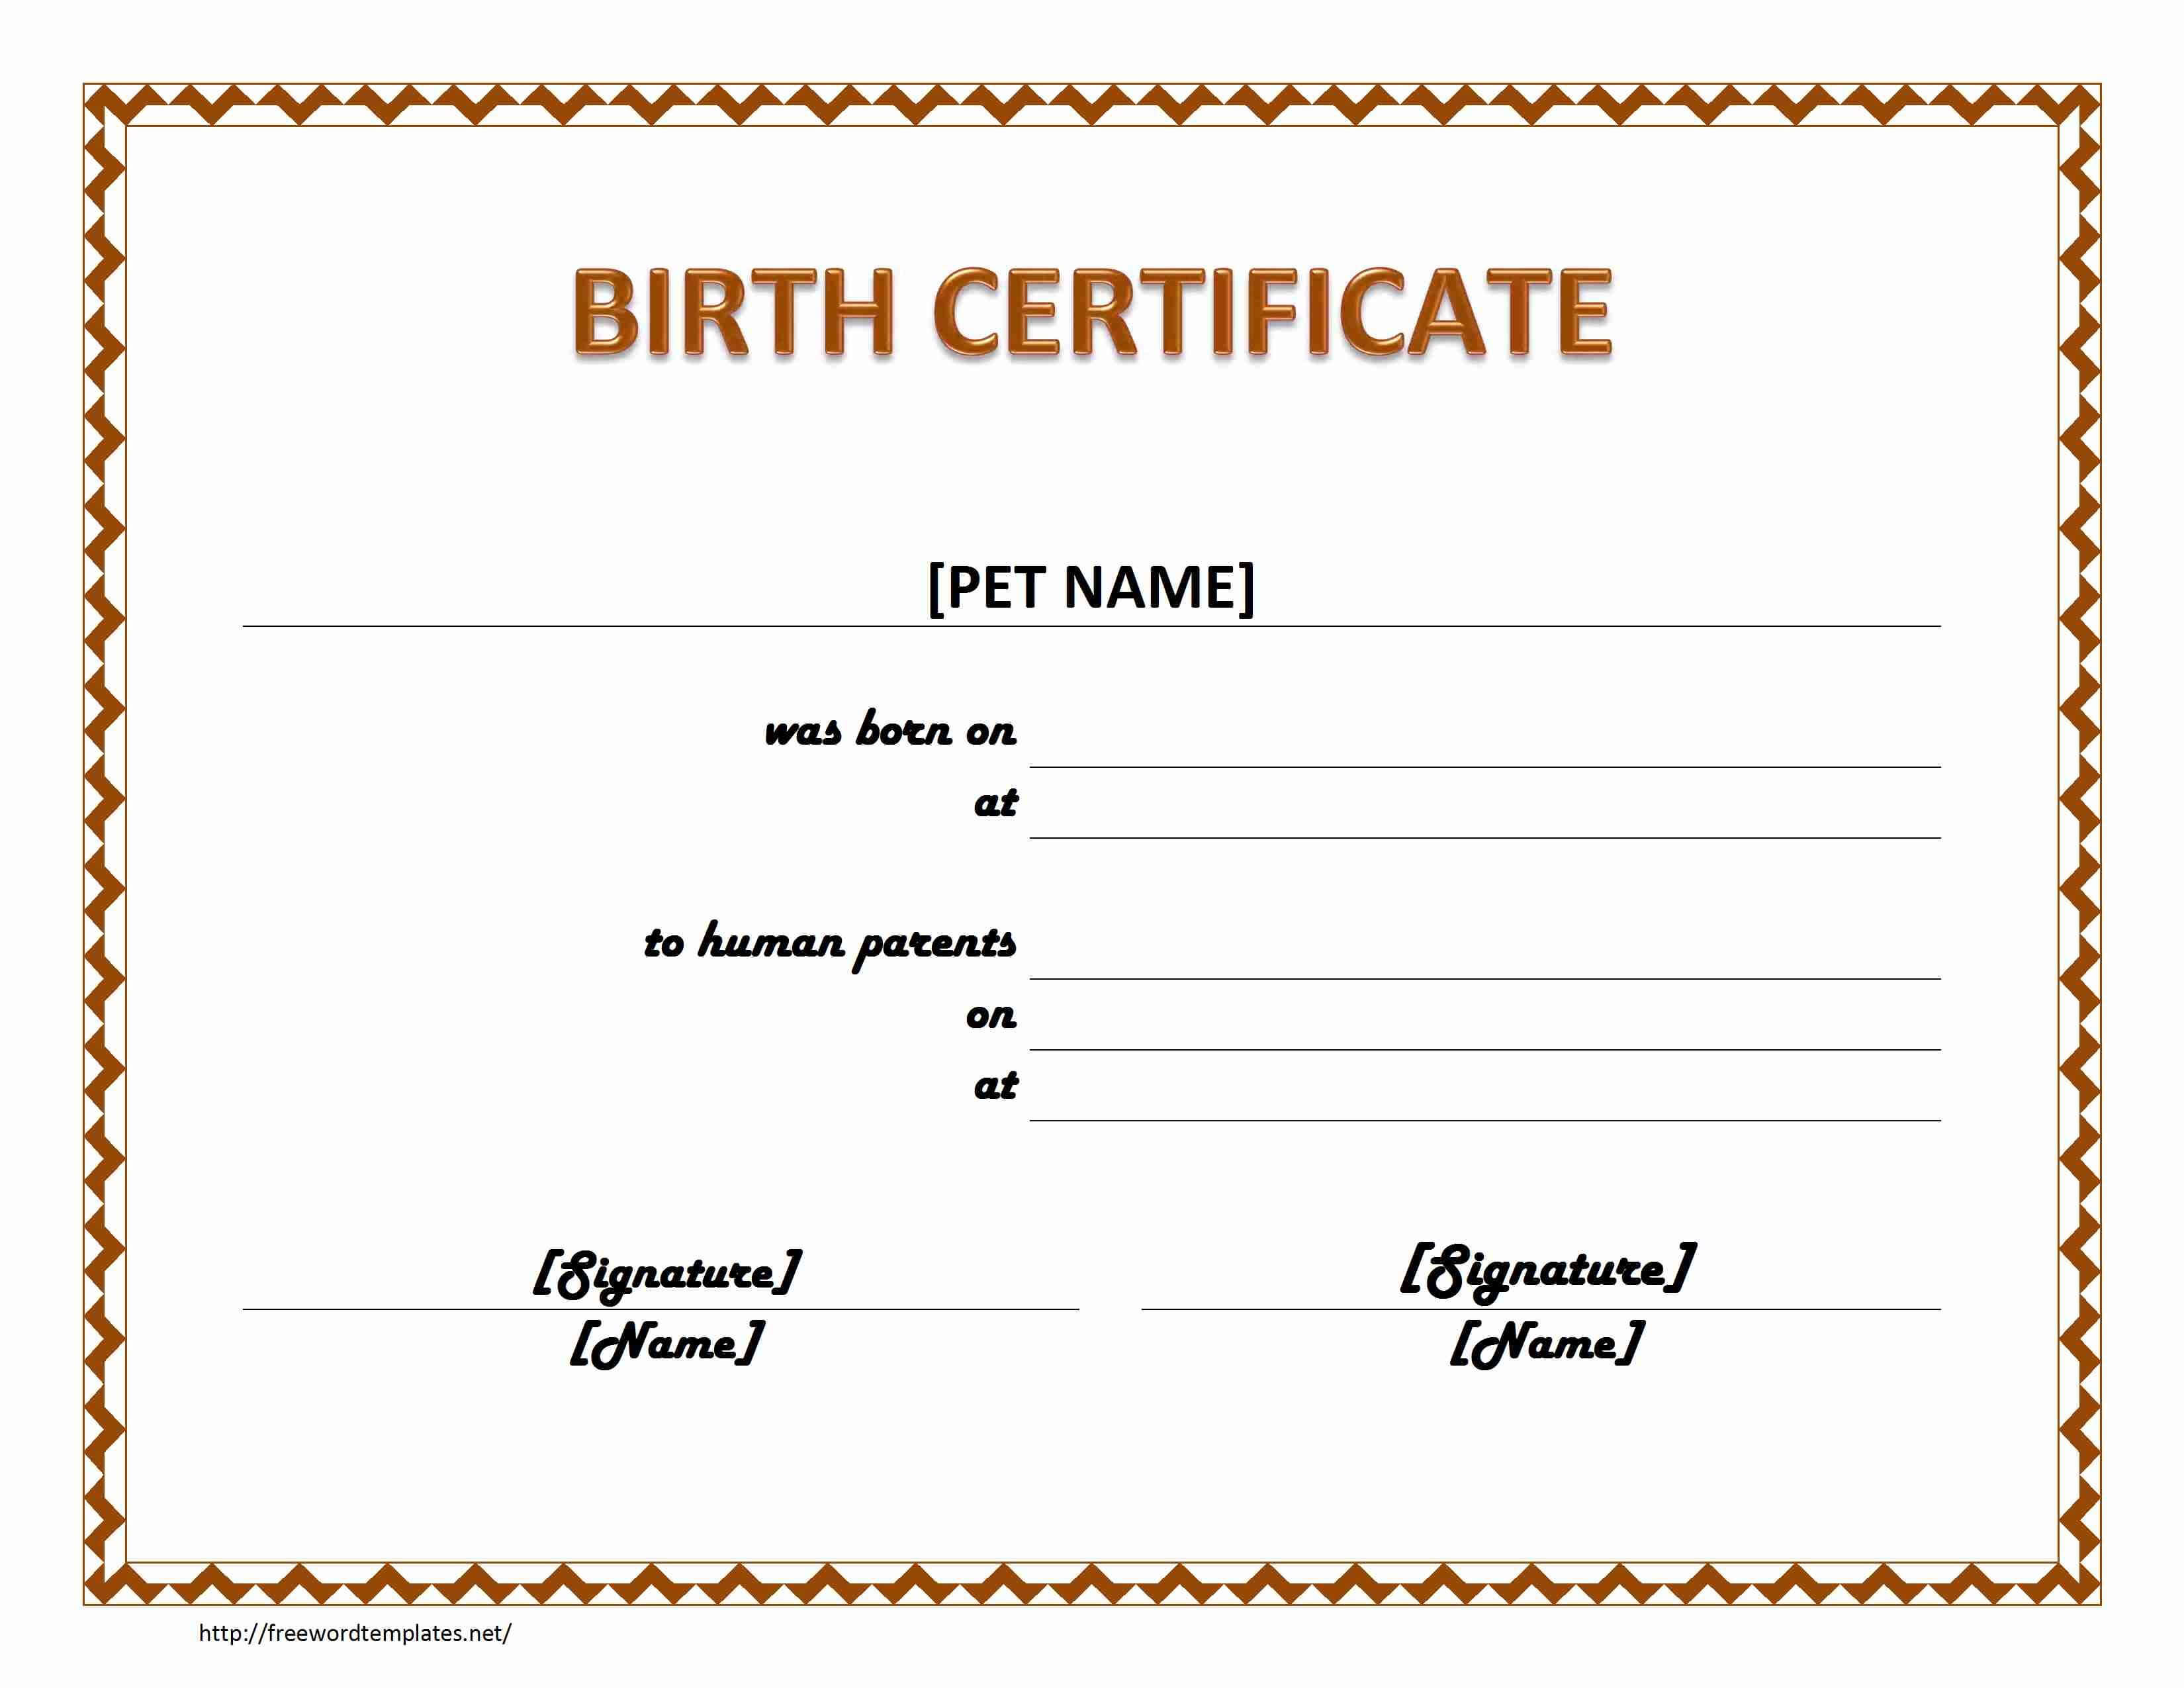 Pet Birth Certificate Maker | Pet Birth Certificate For Word For Birth Certificate Template For Microsoft Word